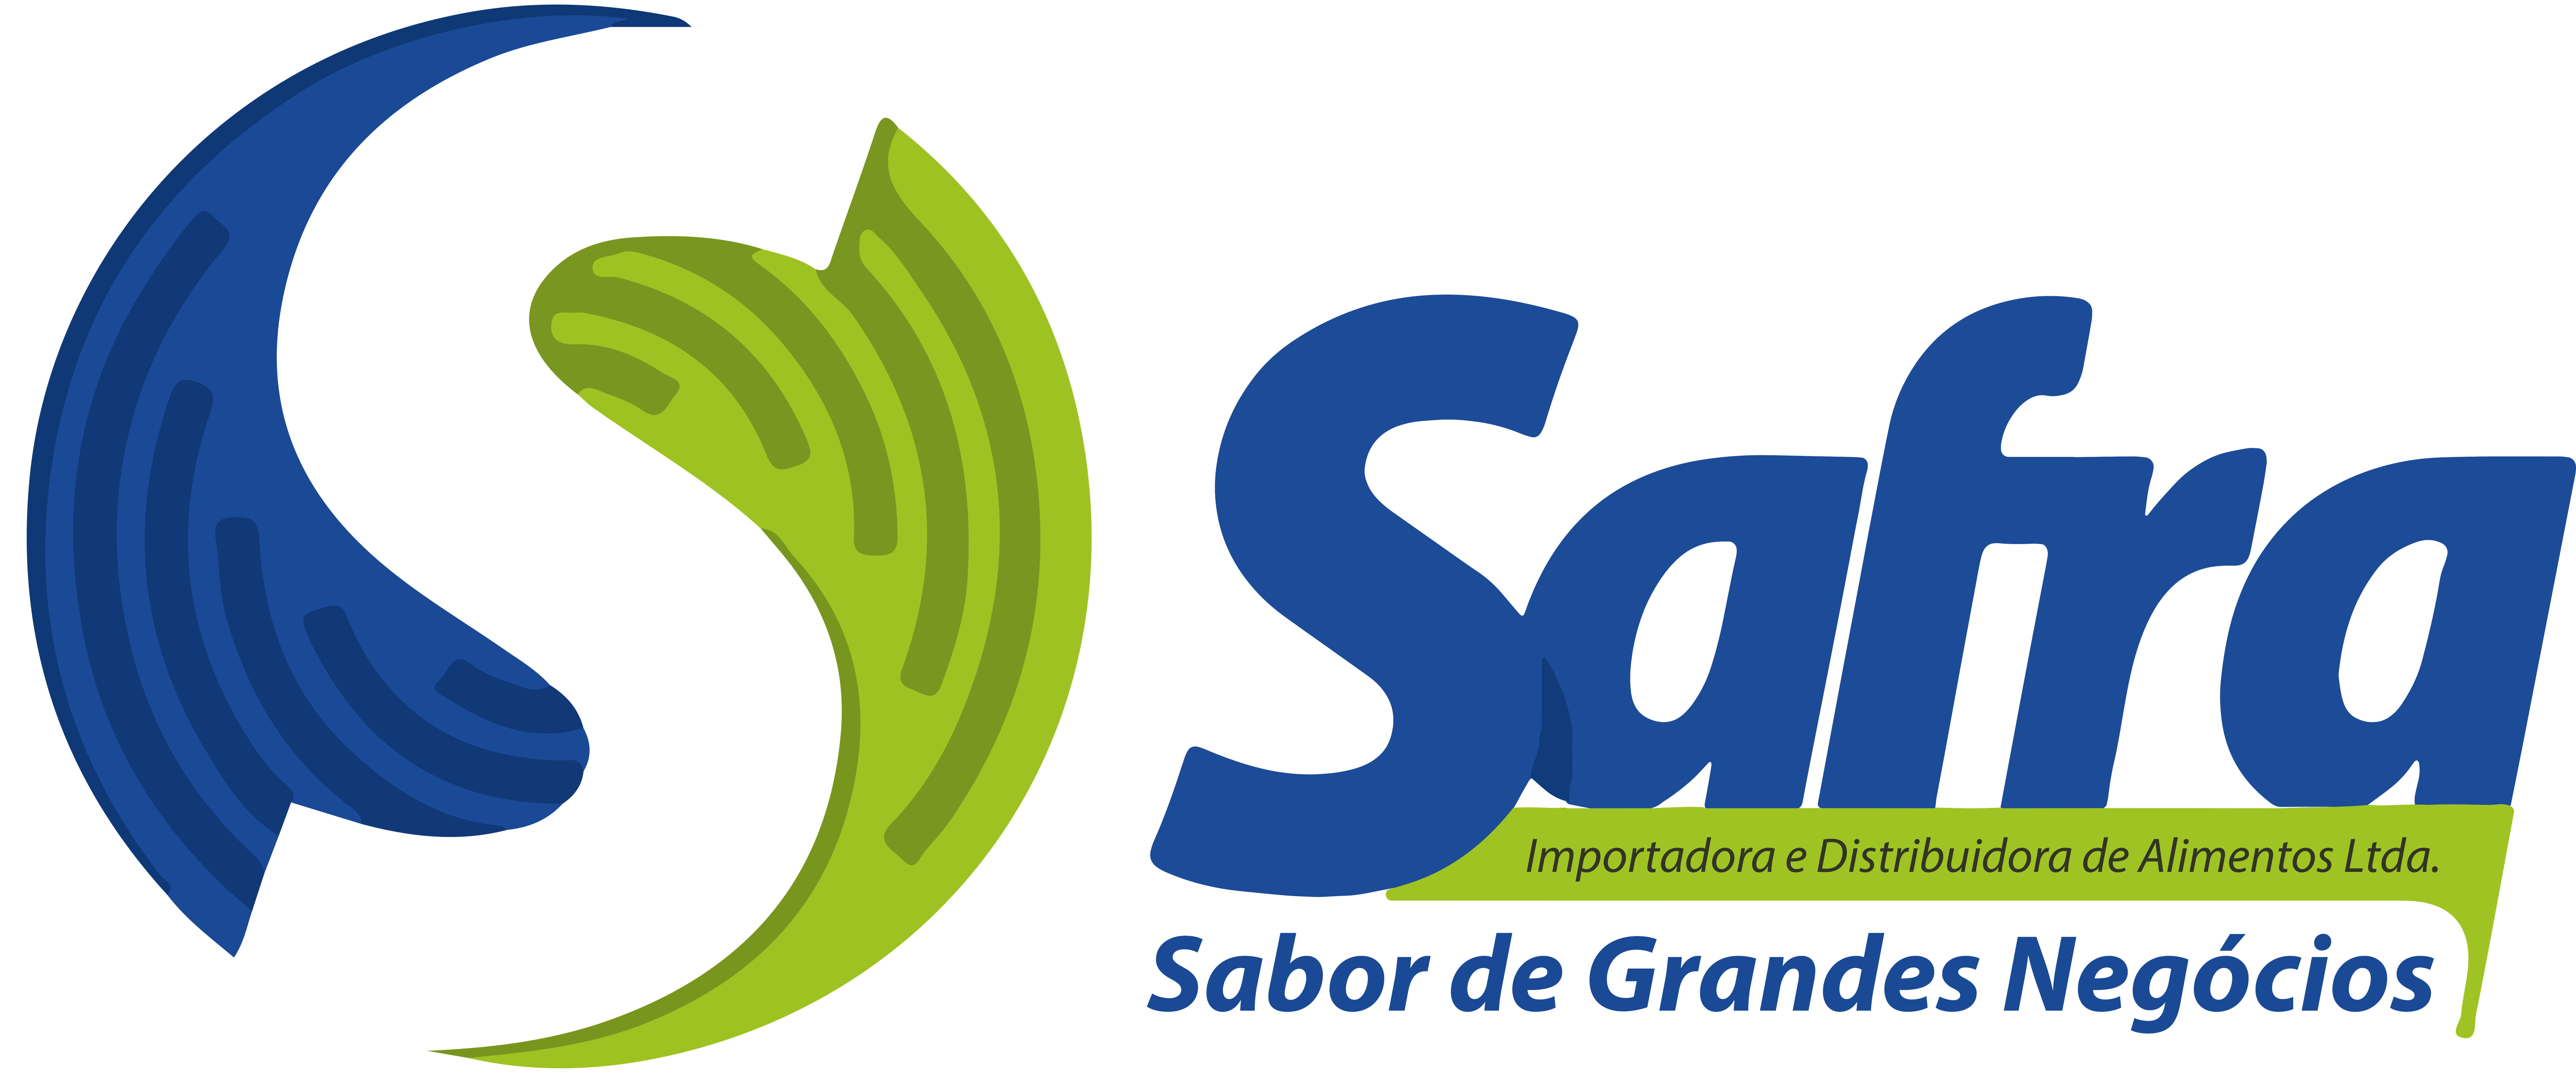 Logo Safra - @distribuidorasafra